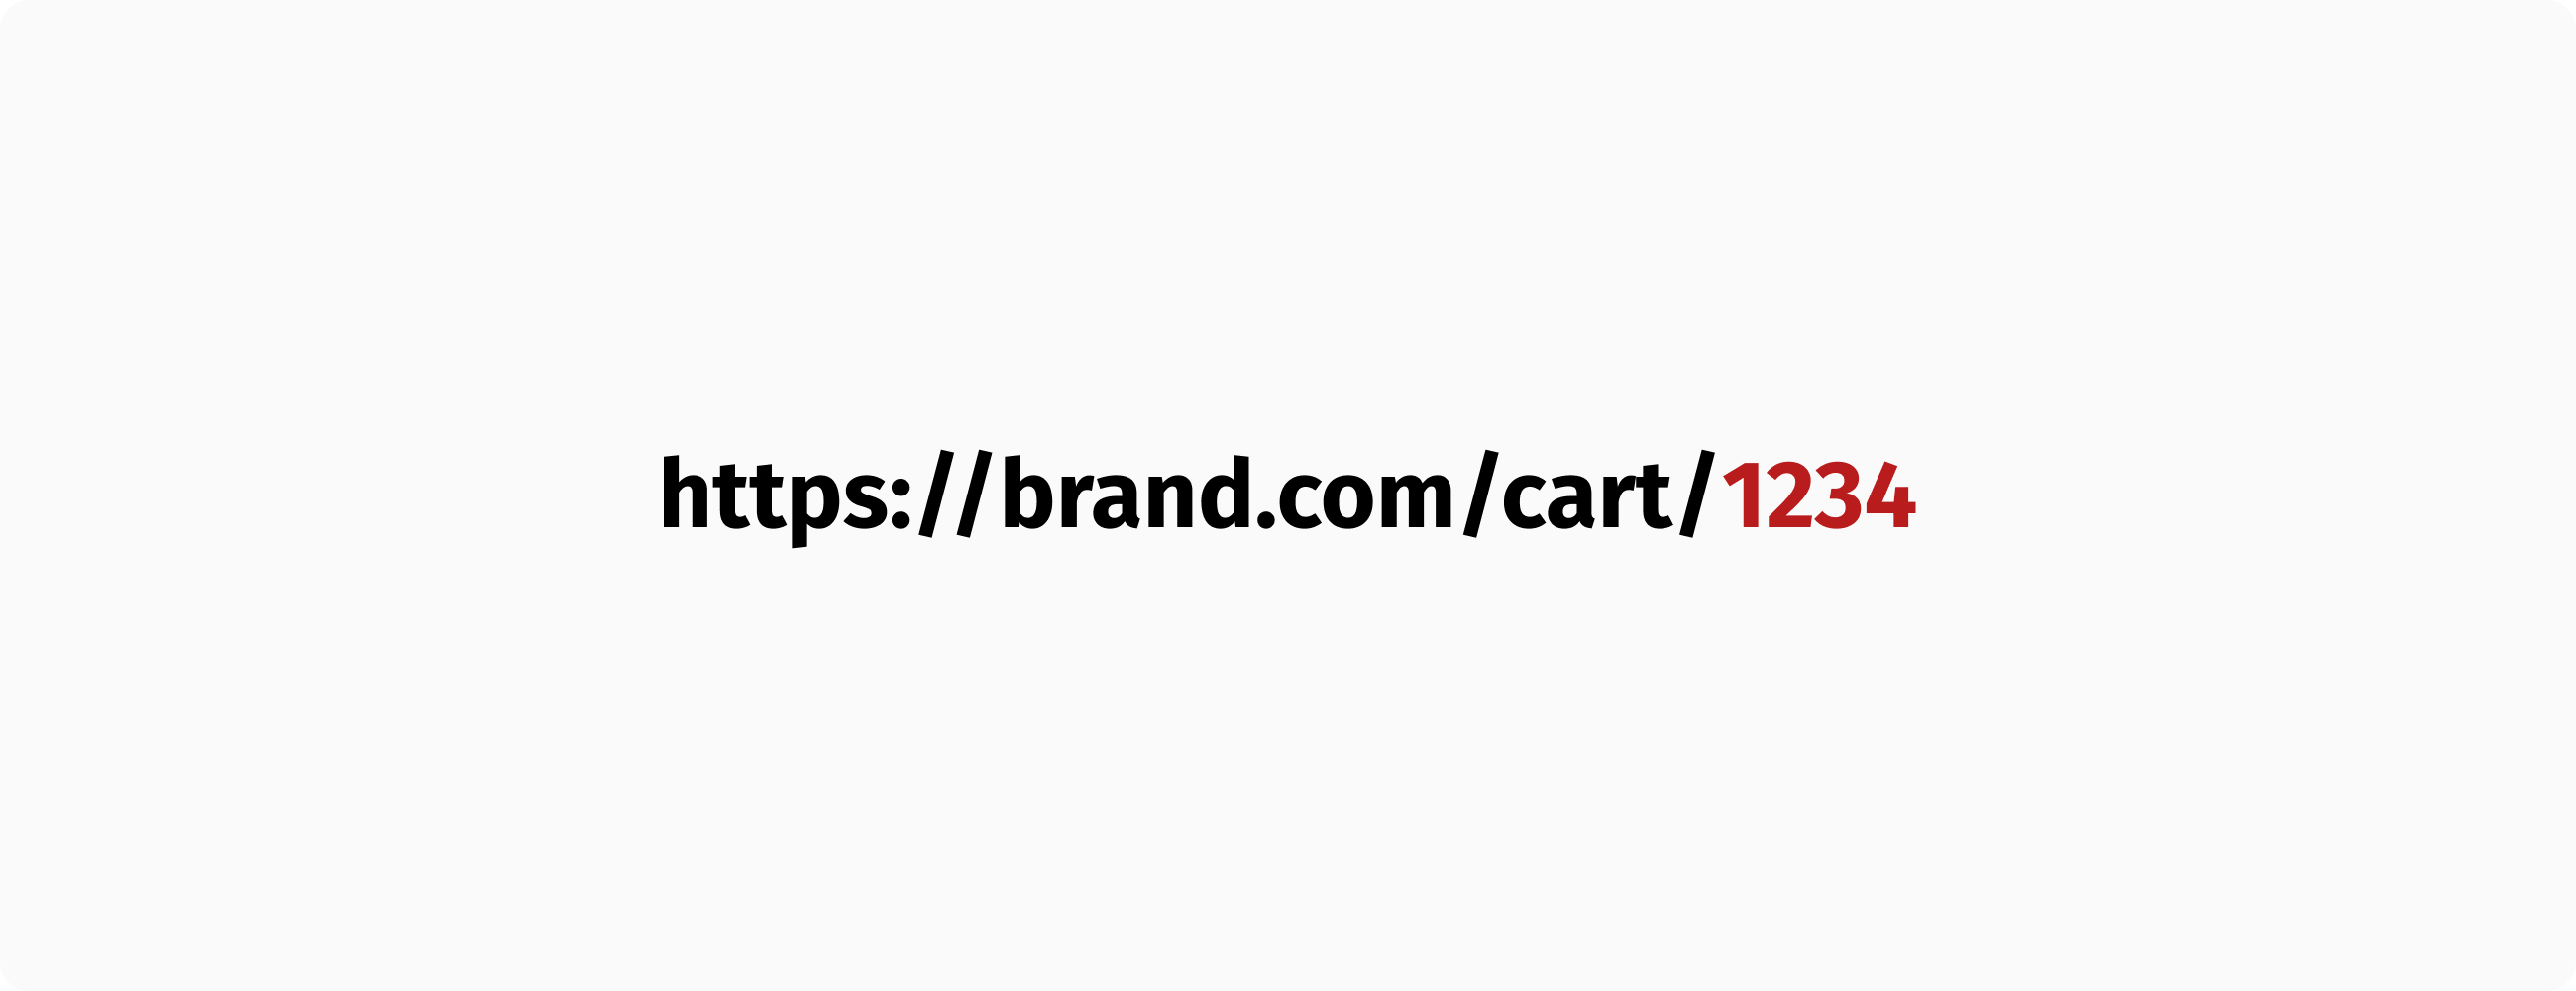 A stateless cart URL.